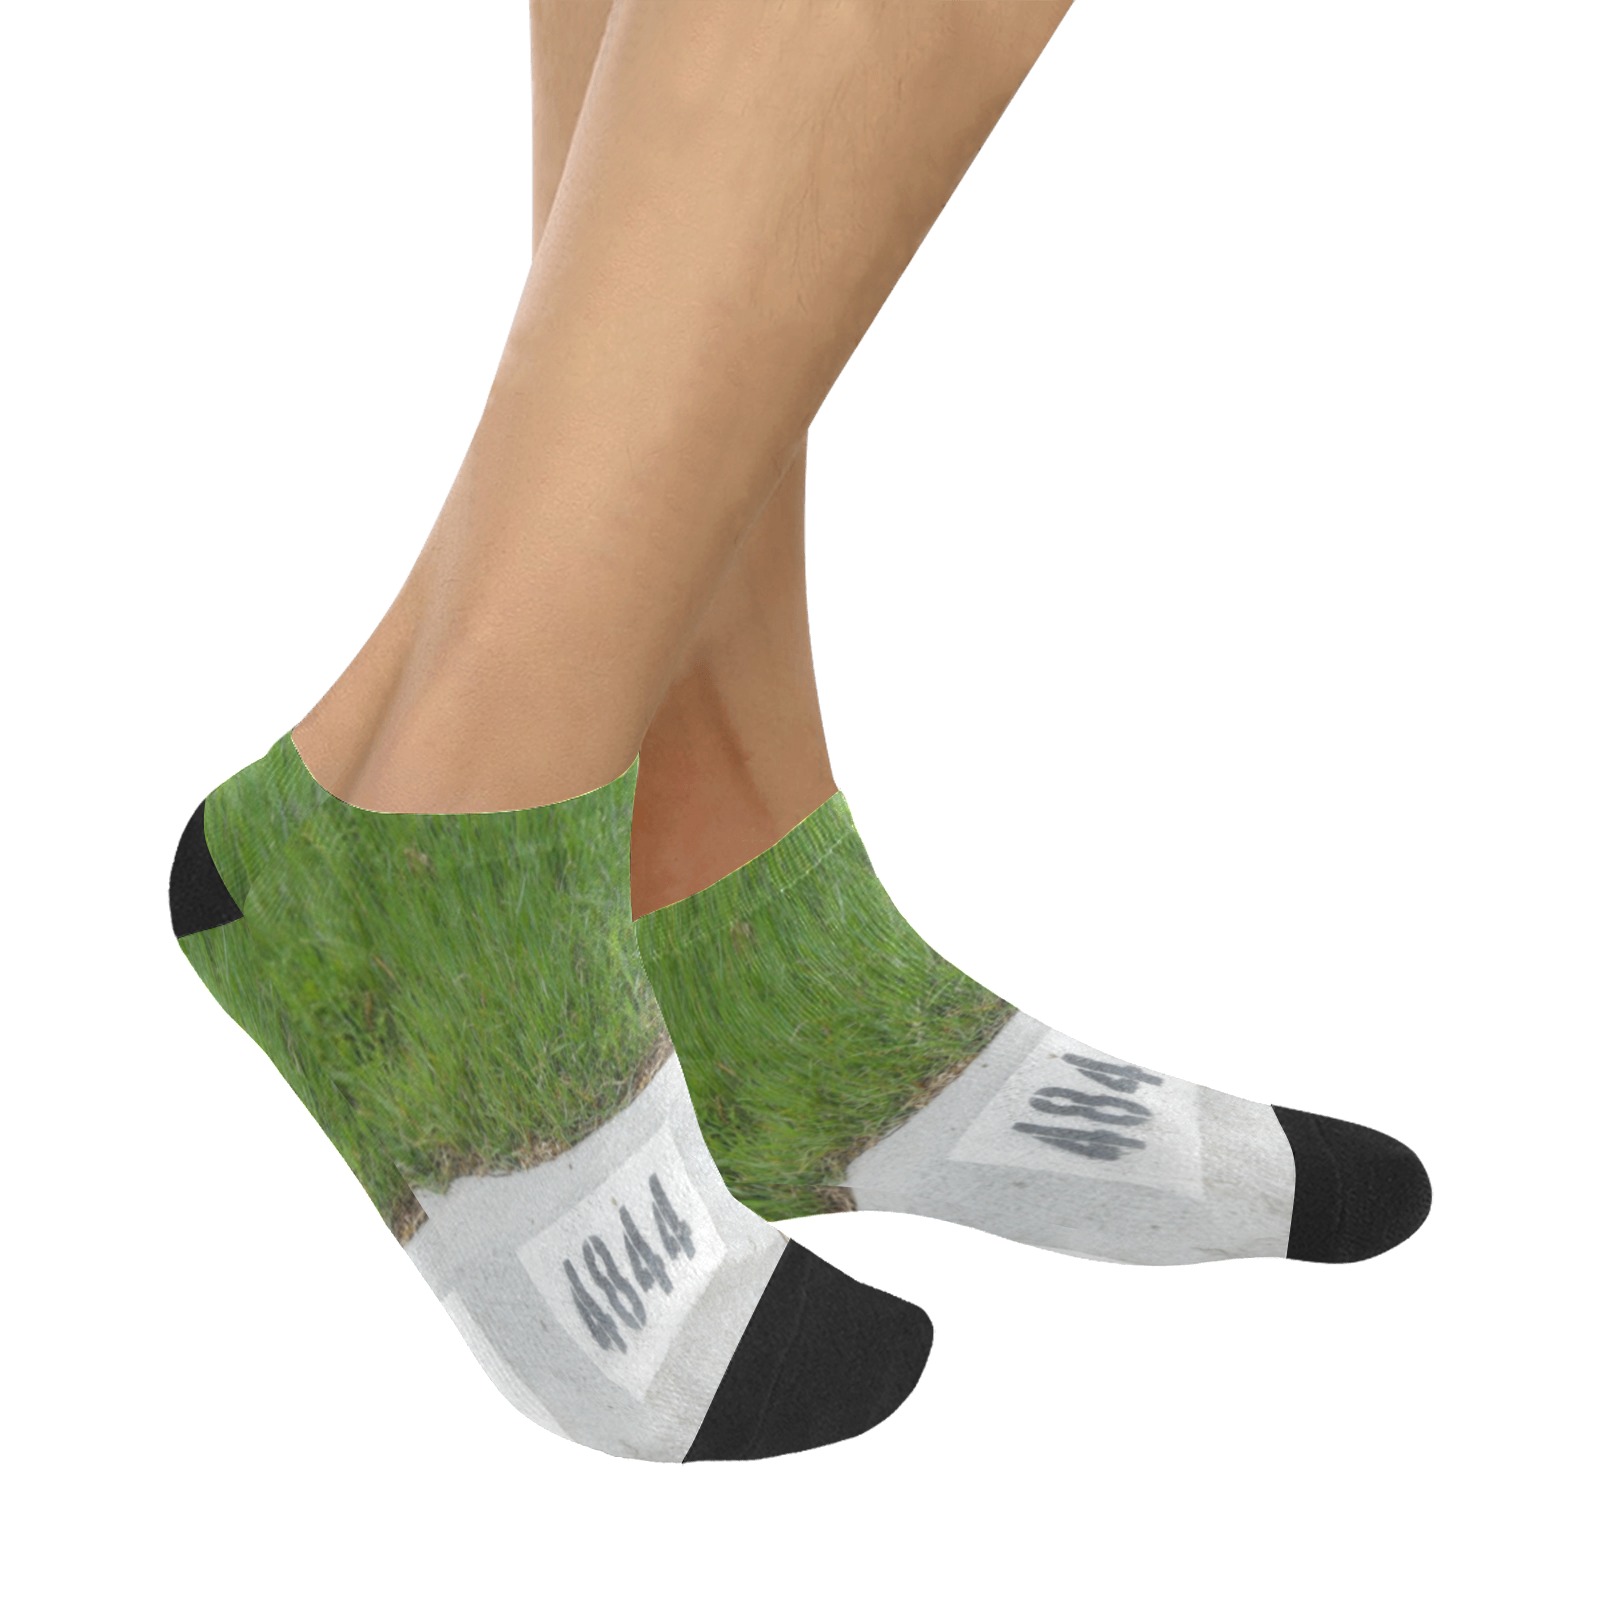 Street Number 4844 Men's Ankle Socks